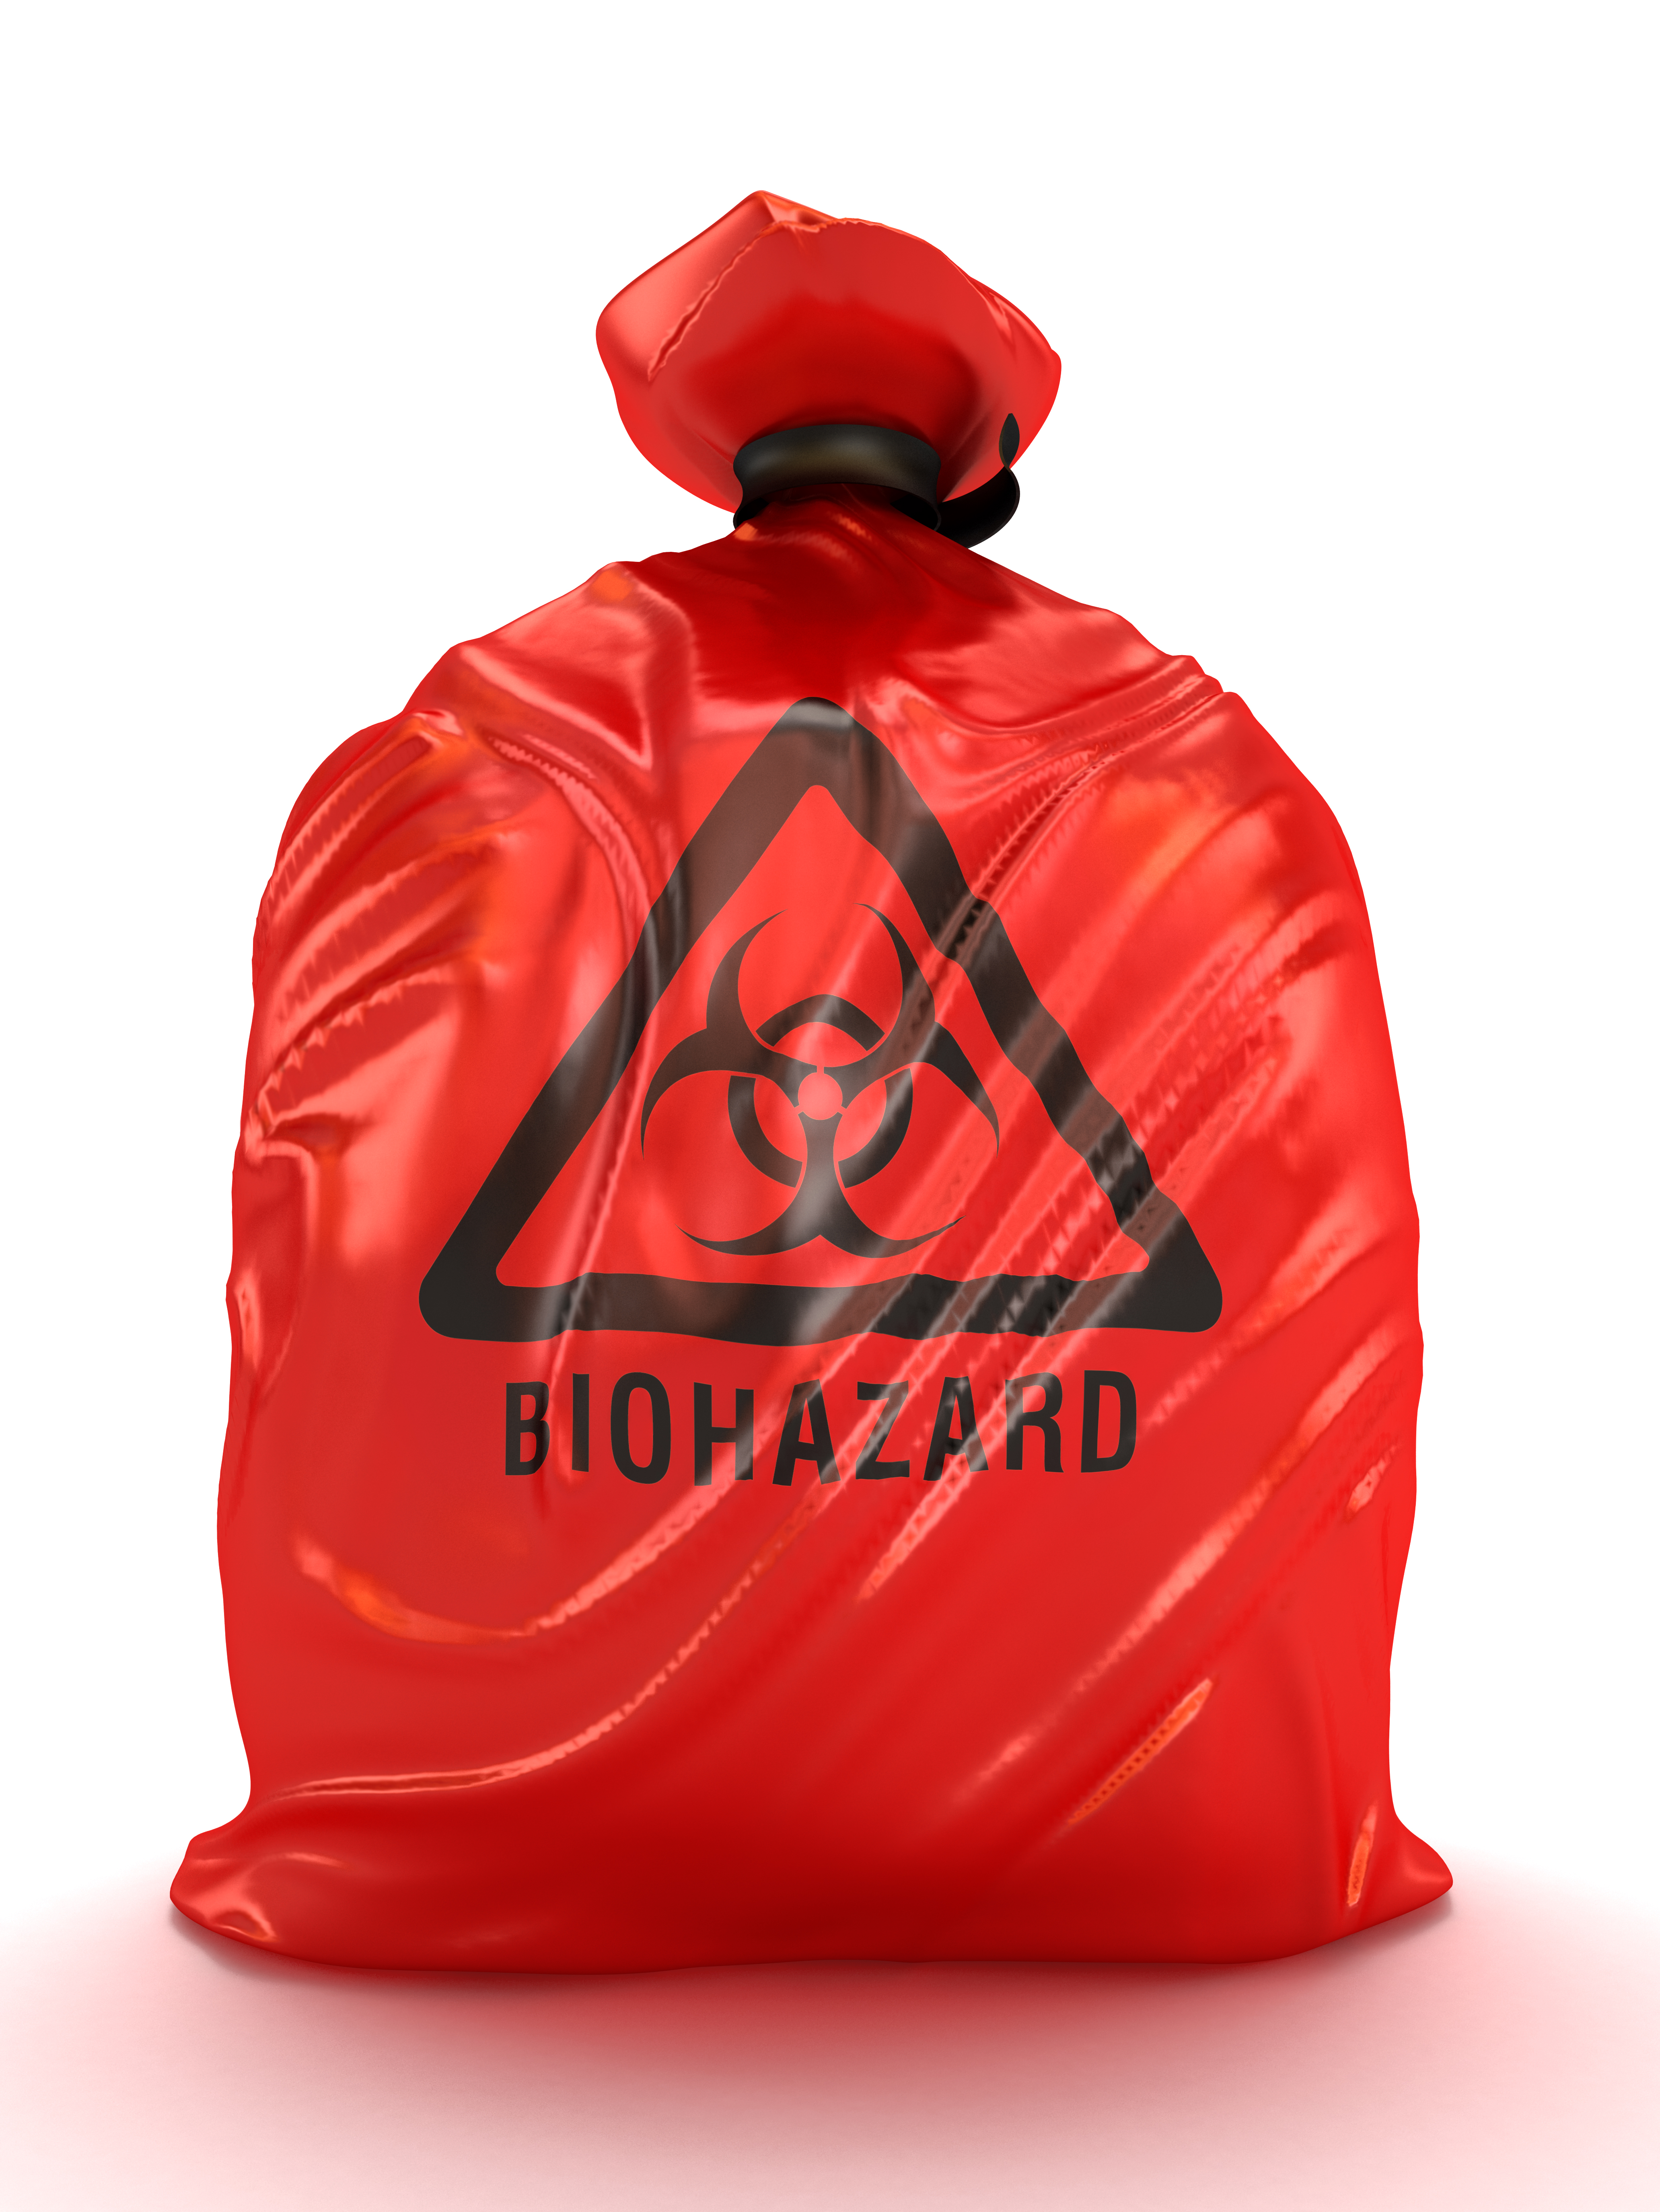 biological hazard symbol meaning